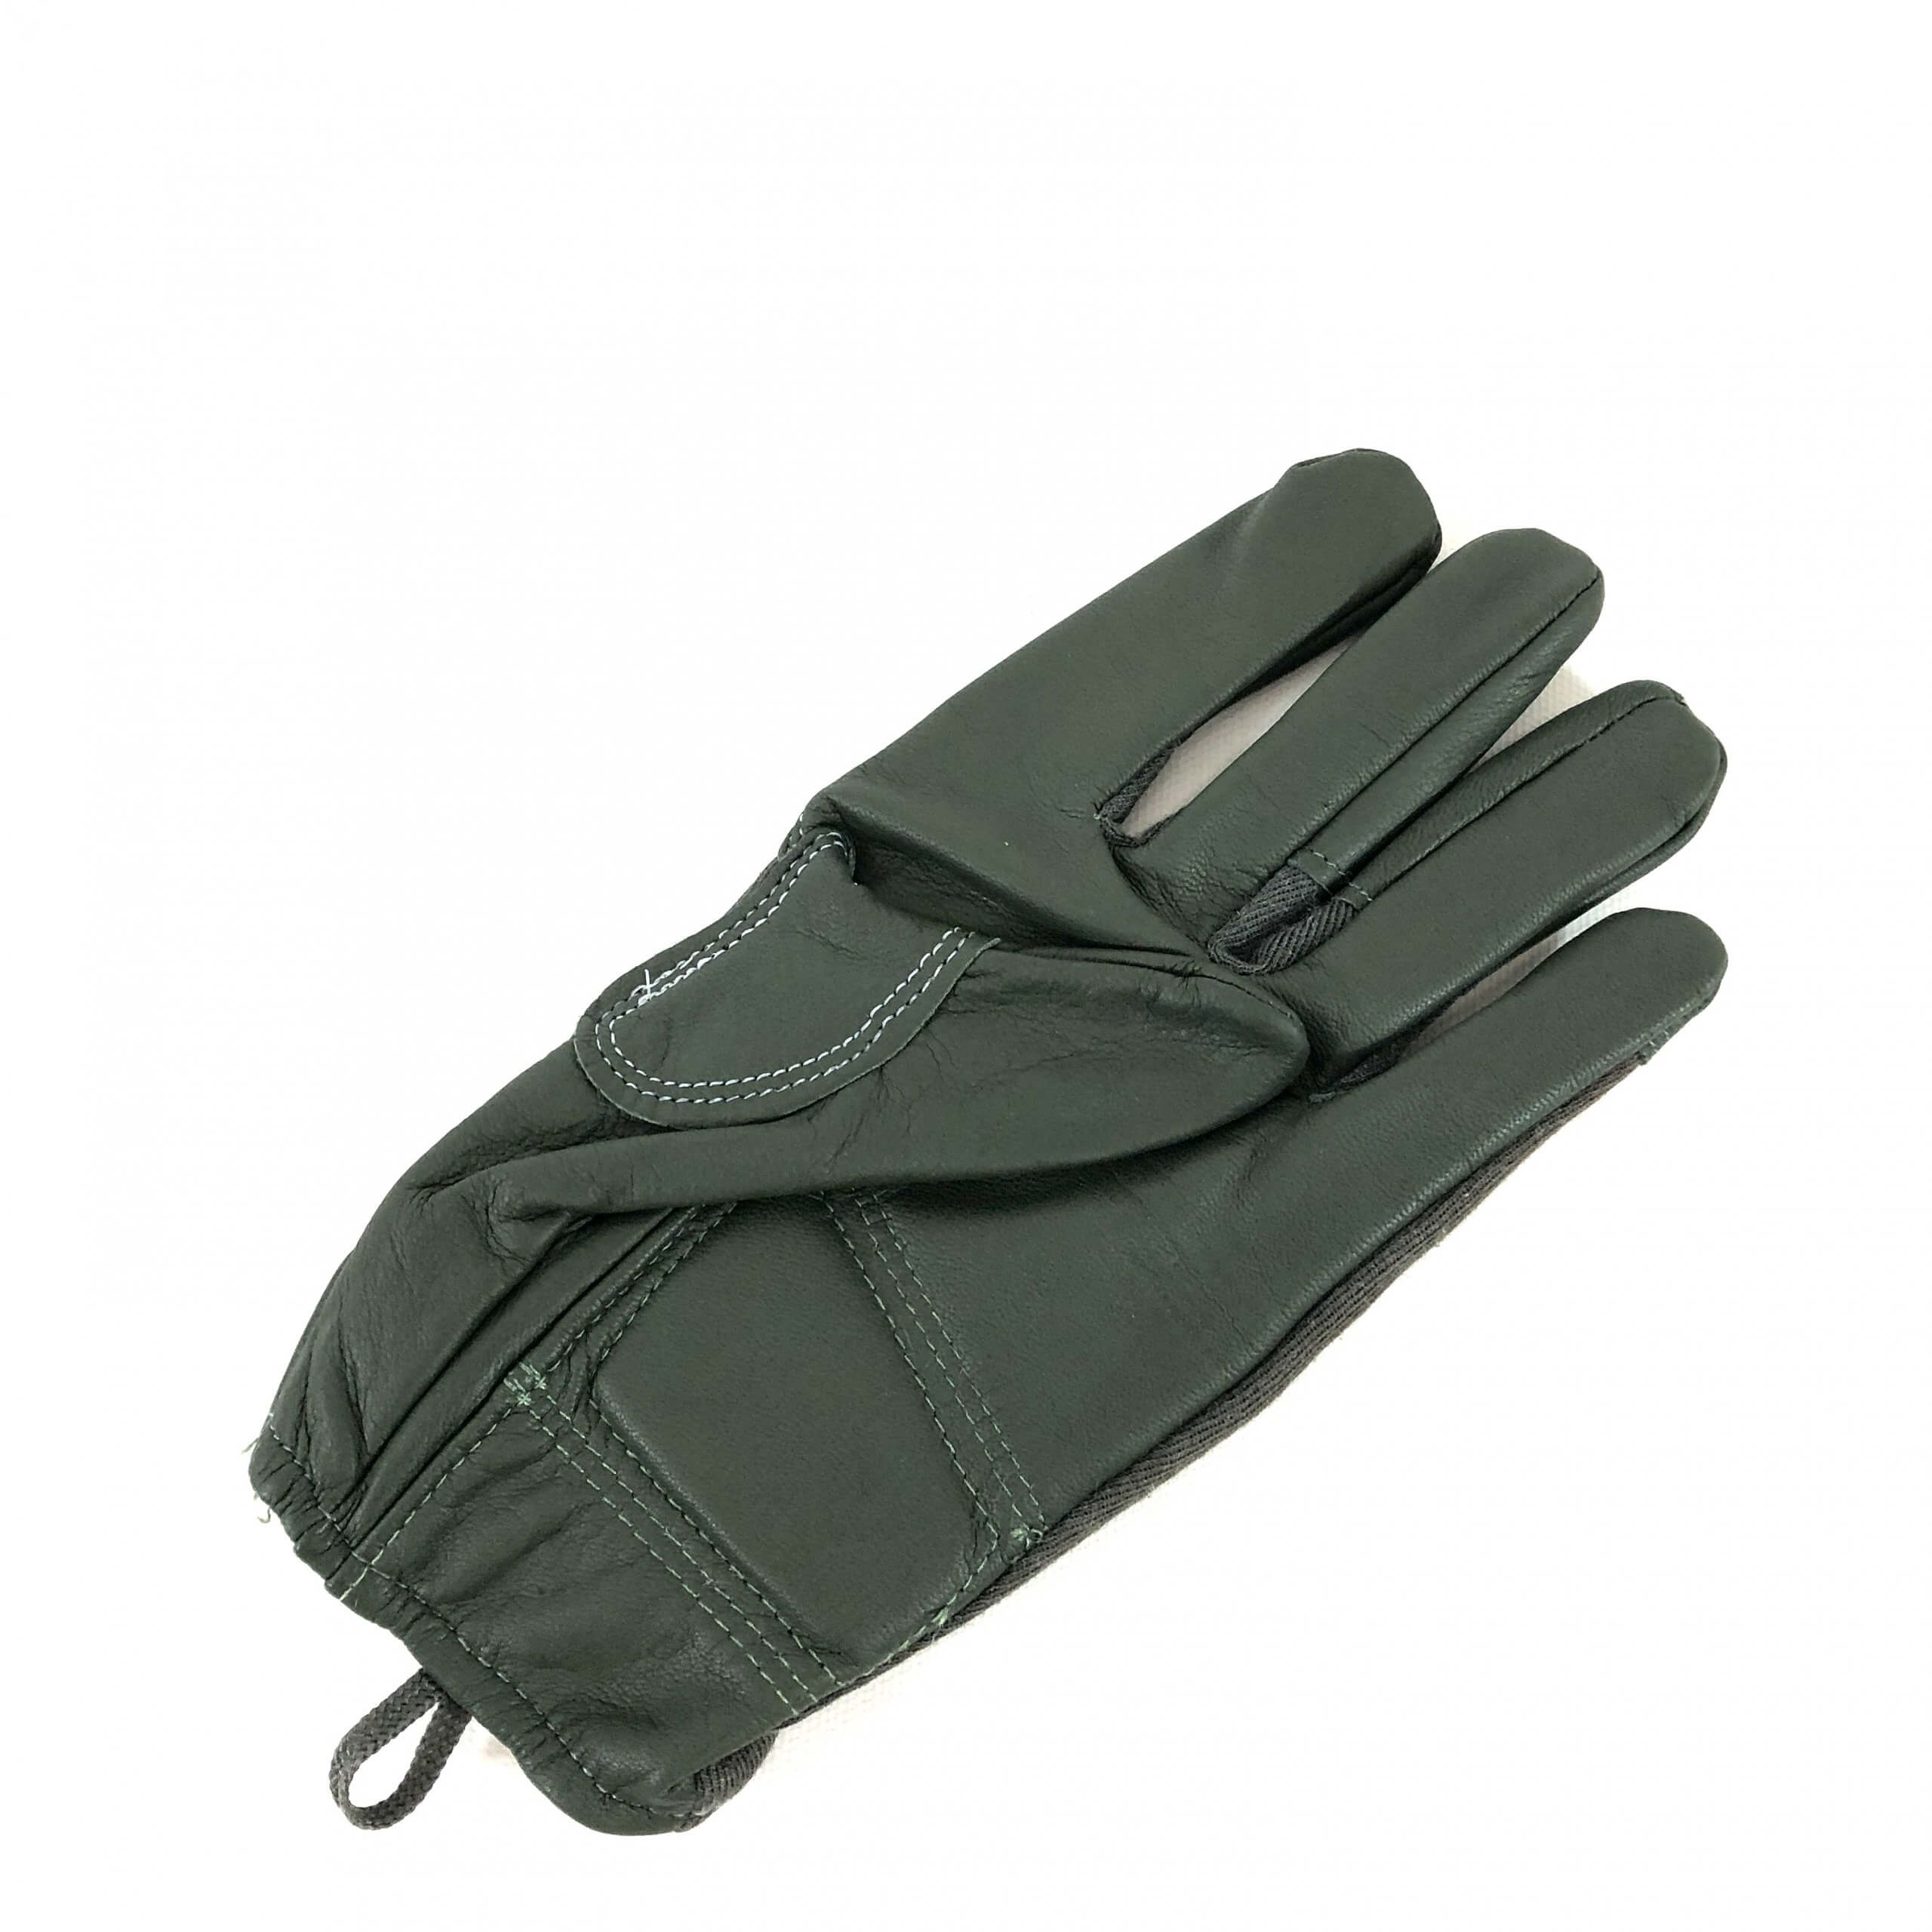 https://www.venturesurplus.com/wp-content/uploads/2021/02/US-Army-Combat-Gloves-New-2-scaled.jpg